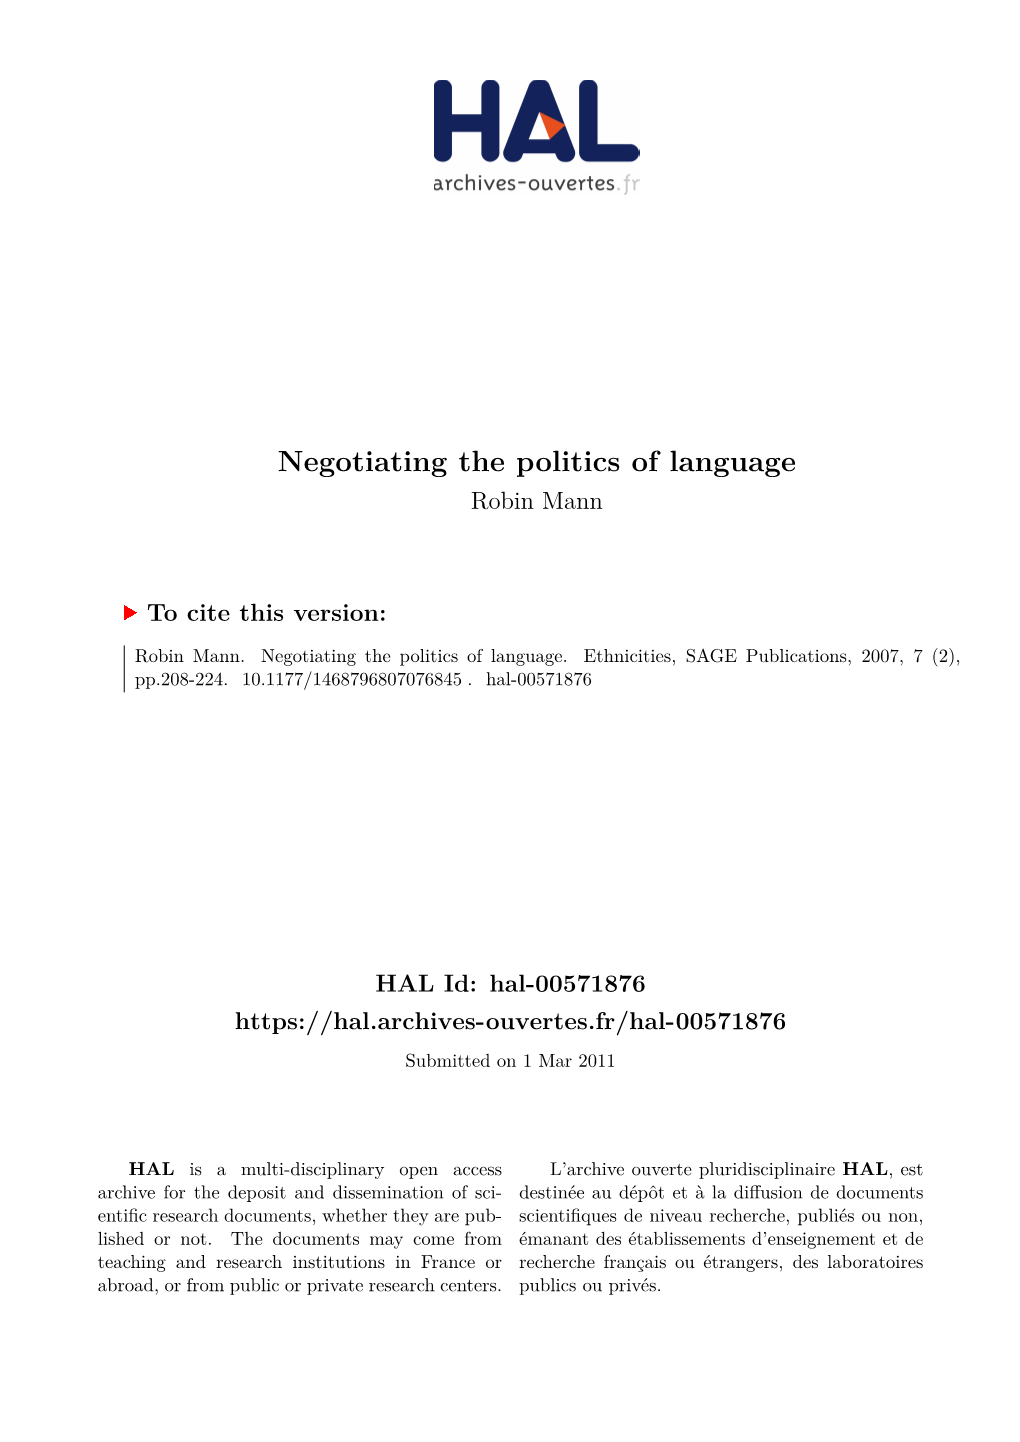 Negotiating the Politics of Language Robin Mann